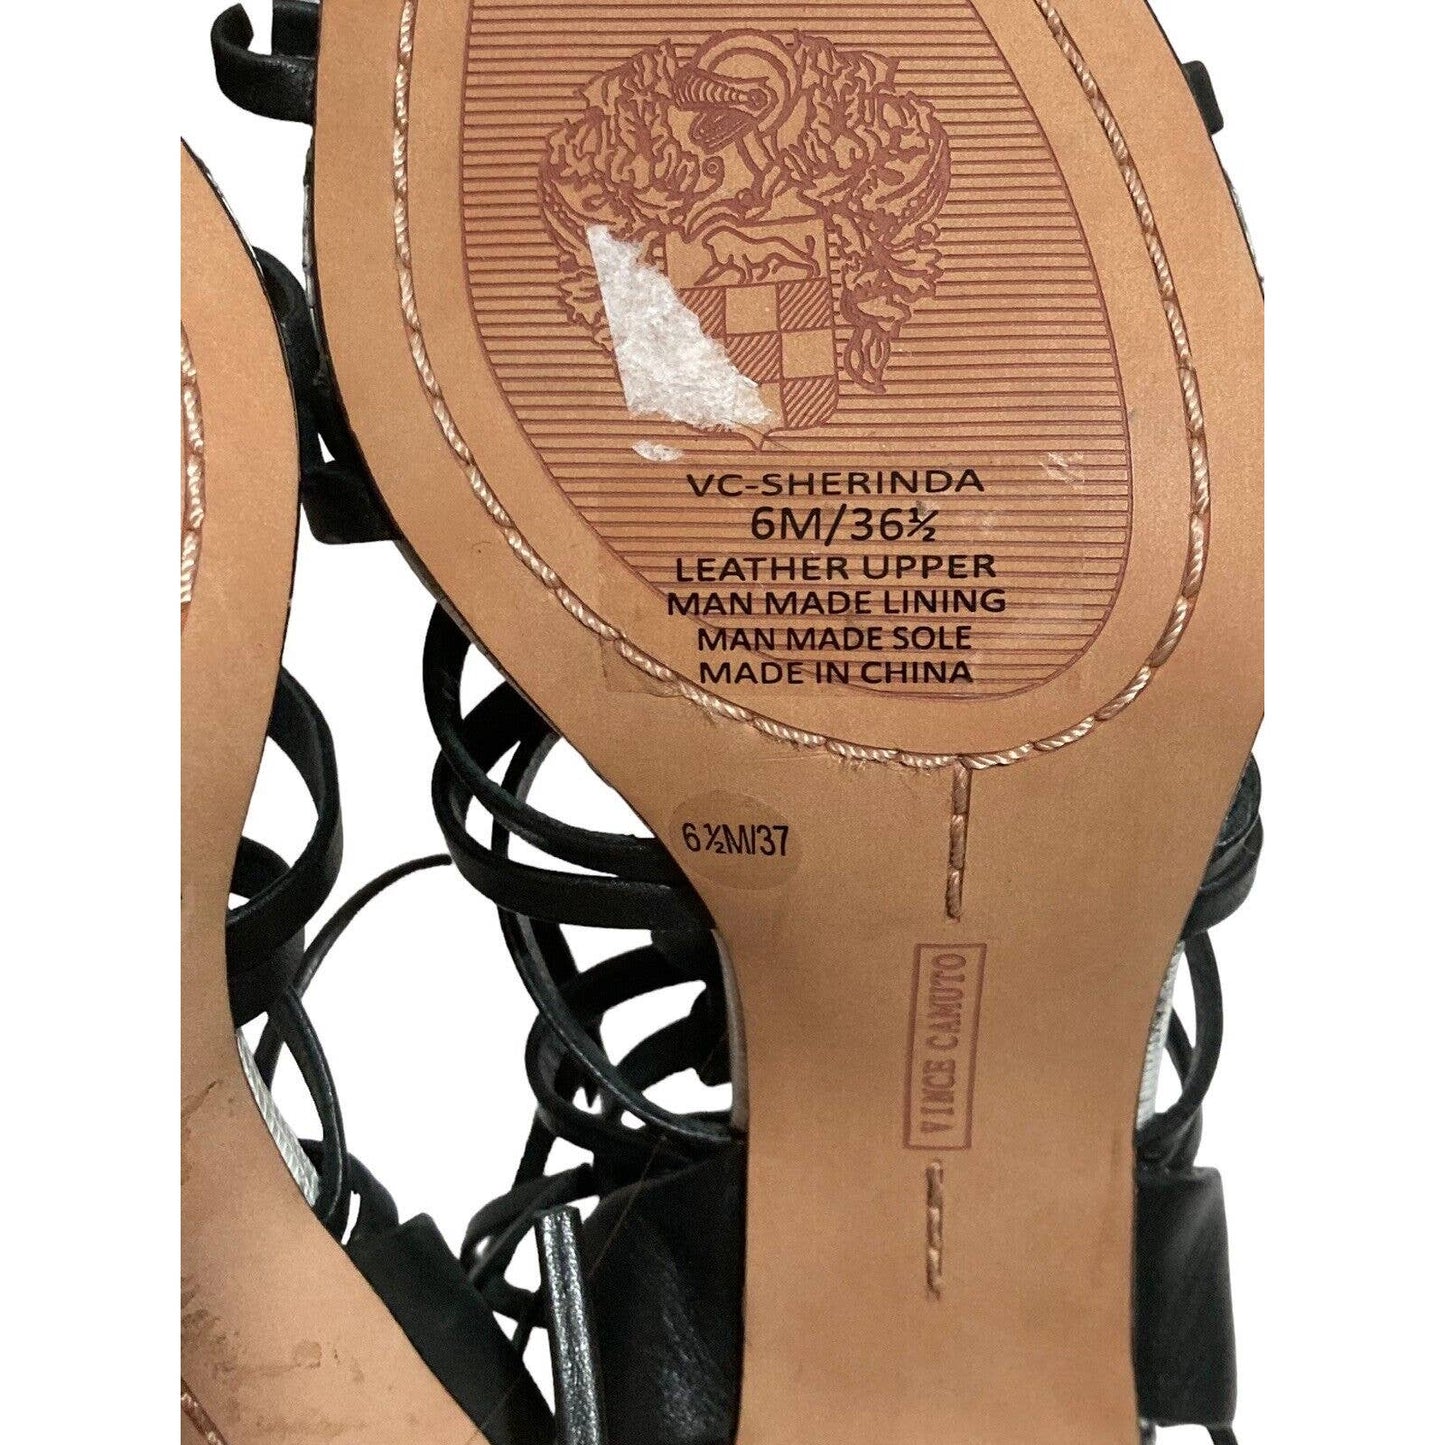 Vince Camuto Sherinda Caged Lace Up Snake Heels Sandals Size 6.5 M Black Leather